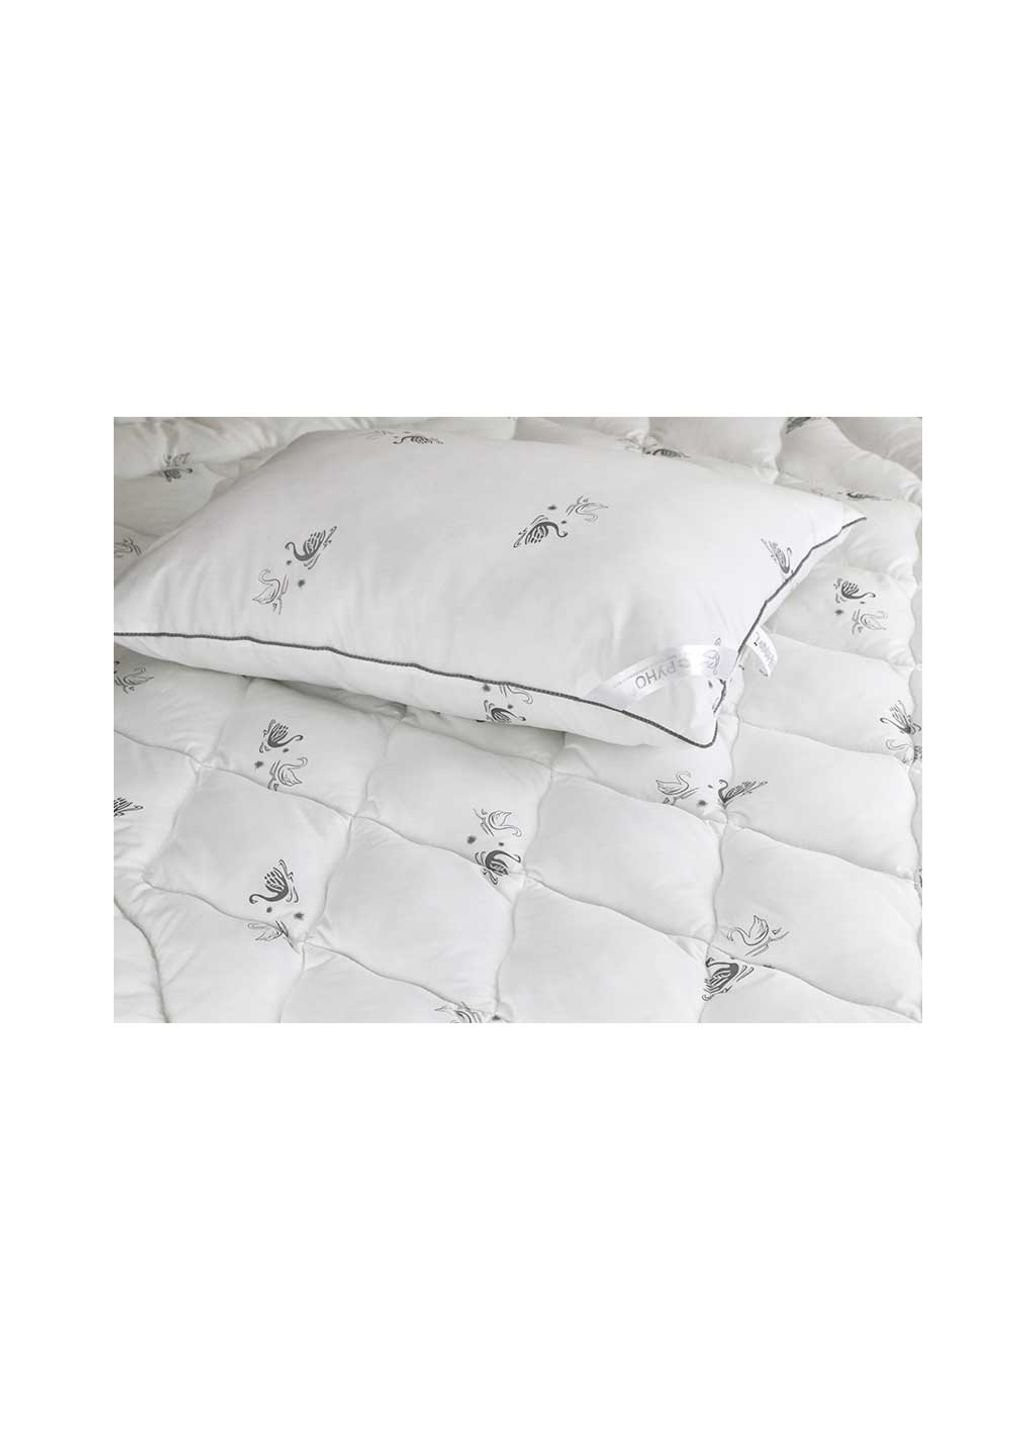 Одеяло из искусственного лебединого пуха Silver Swan 140х205 см (321.52_Silver Swan) Руно (254009505)